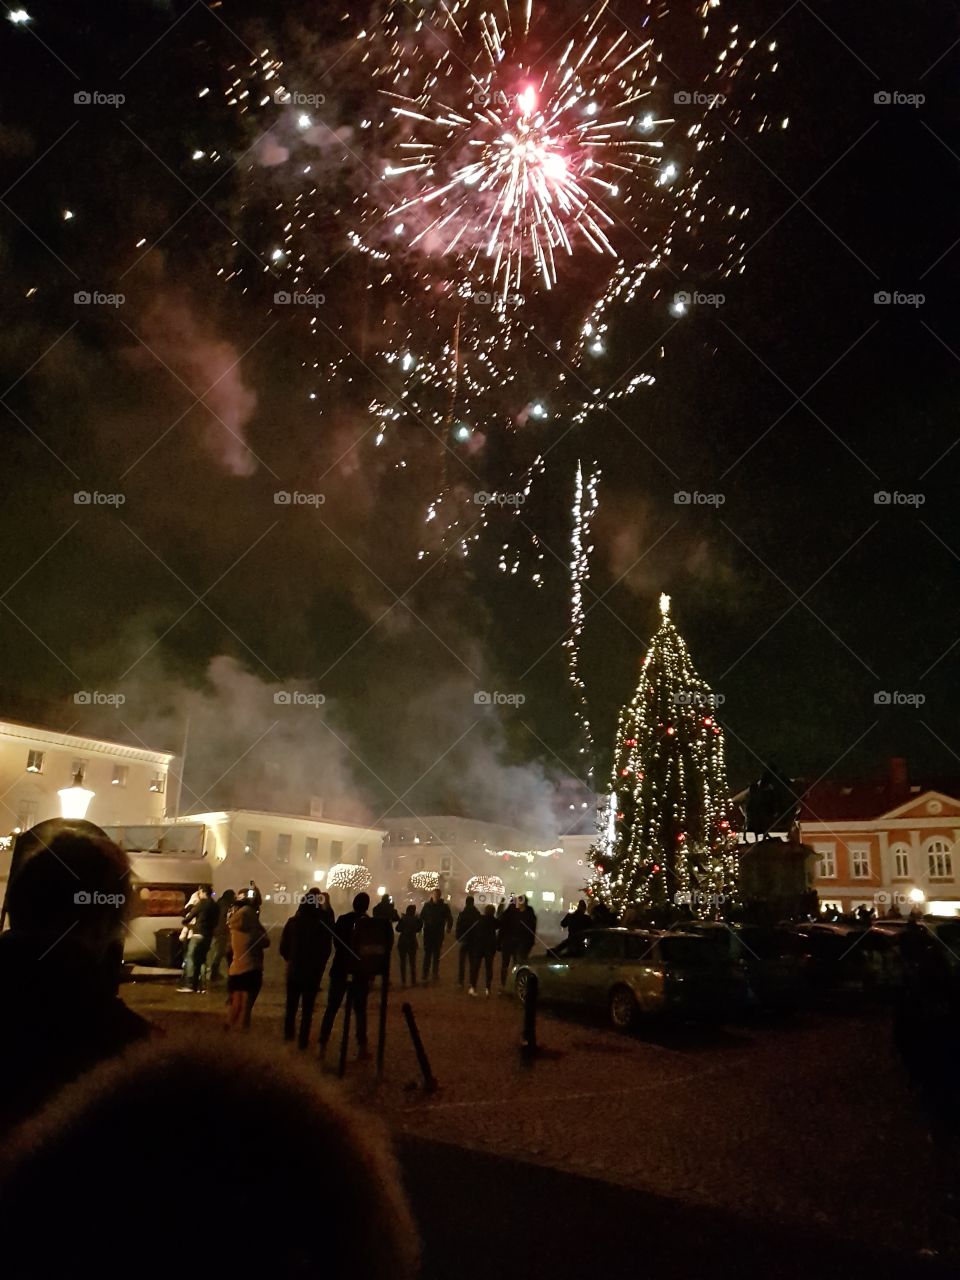 Fireworks, Festival, Flame, Celebration, Explosion